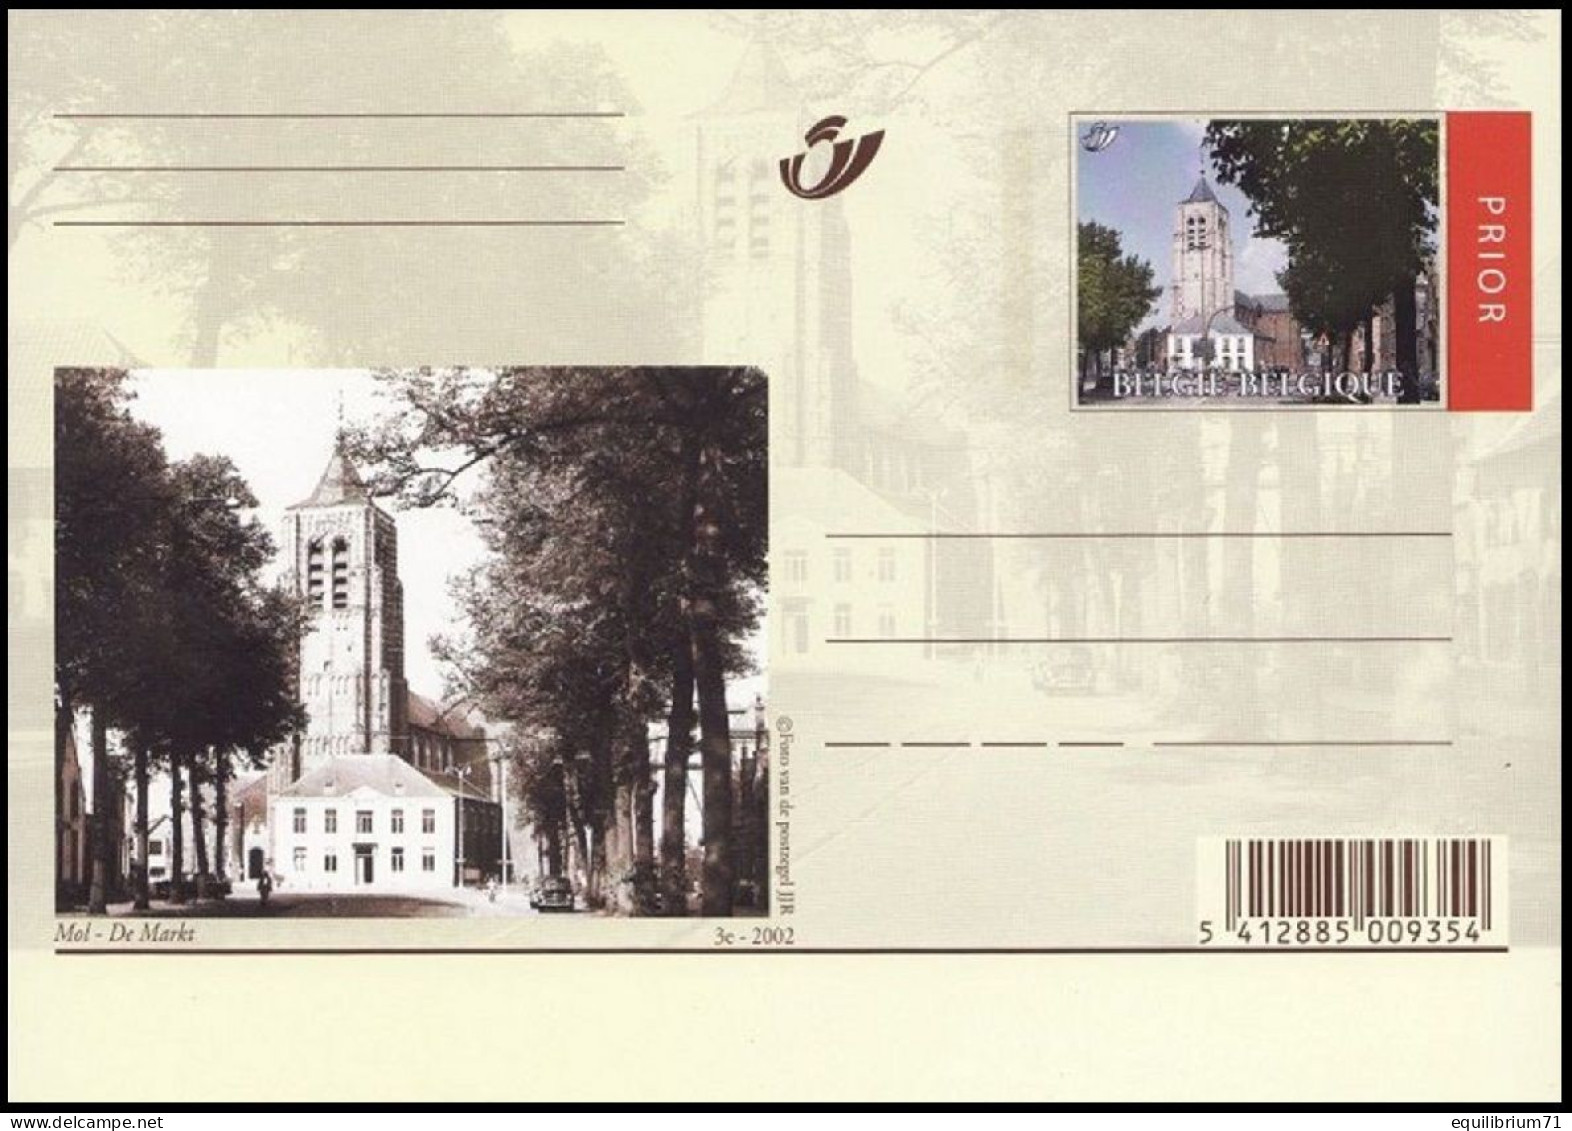 CP/BK83** - Cartes Illustrées/Geïllustreerde Briefkaarten/Illustrierte Postkarten - Autrefois & Maintenant/Vroeger En Nu - Cartoline Illustrate (1971-2014) [BK]